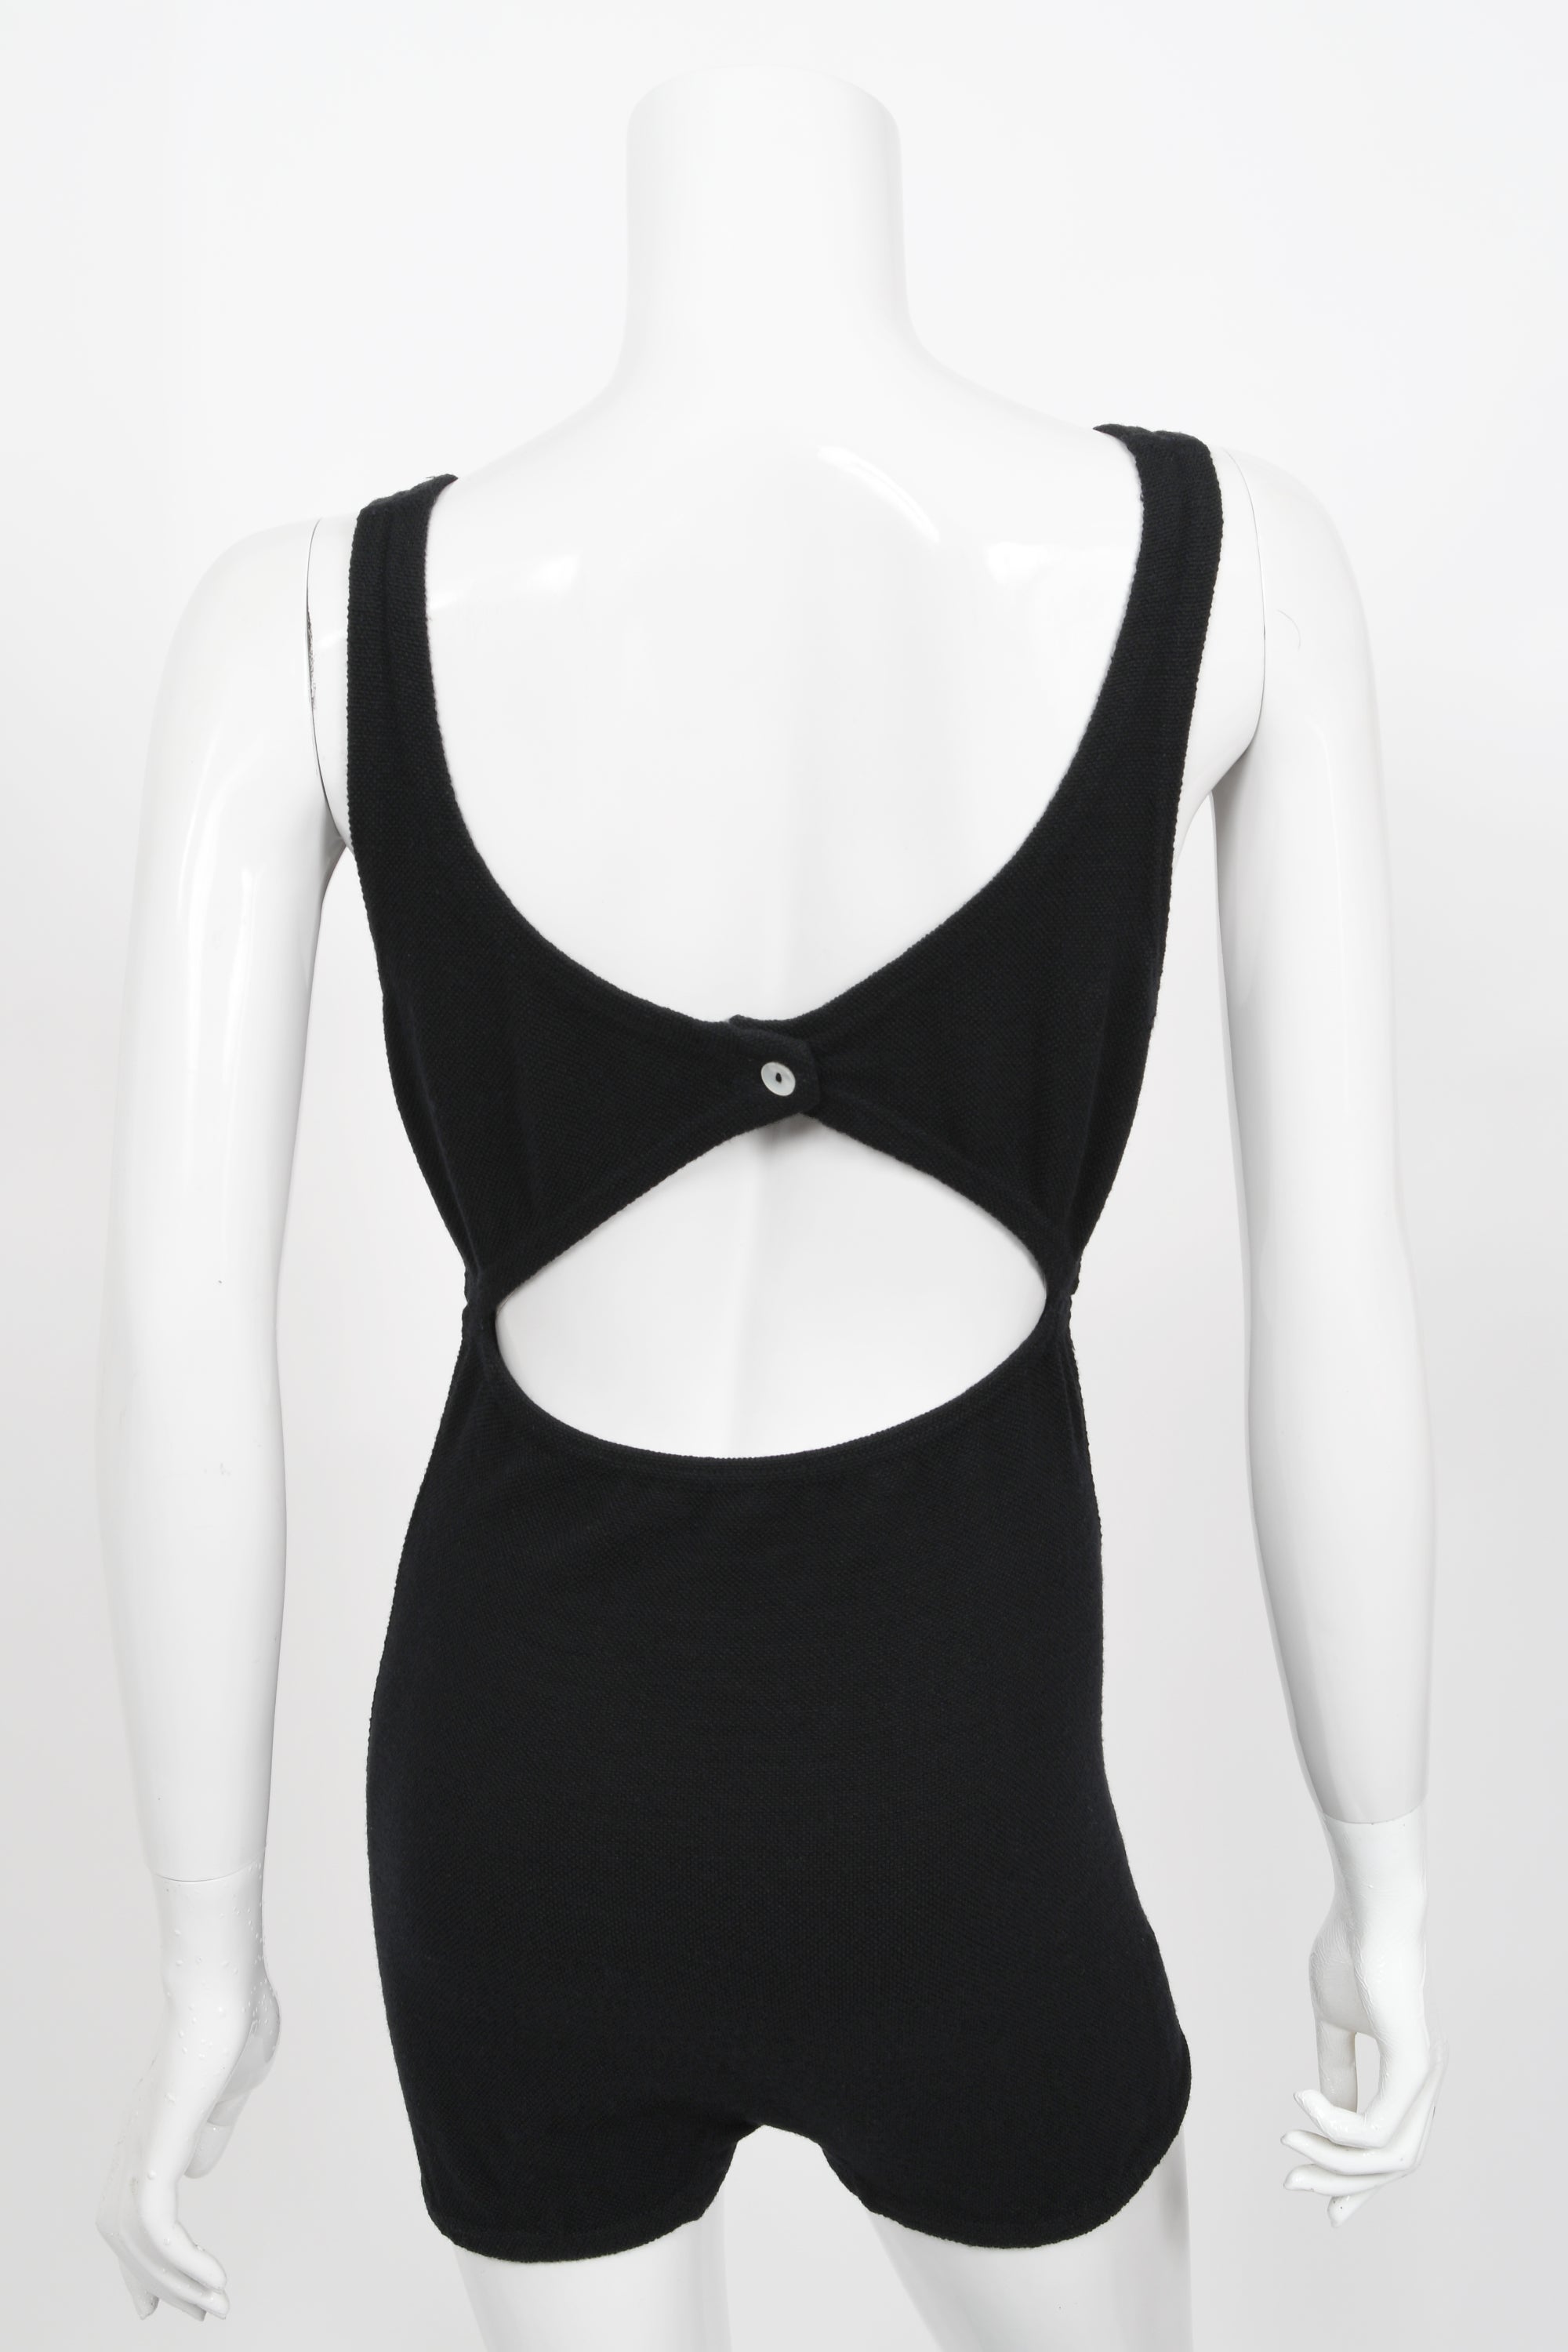 Vintage 1968 Rudi Gernreich Museum-Held Black Wool Jersey Cut Out Mod Swimsuit  For Sale 5